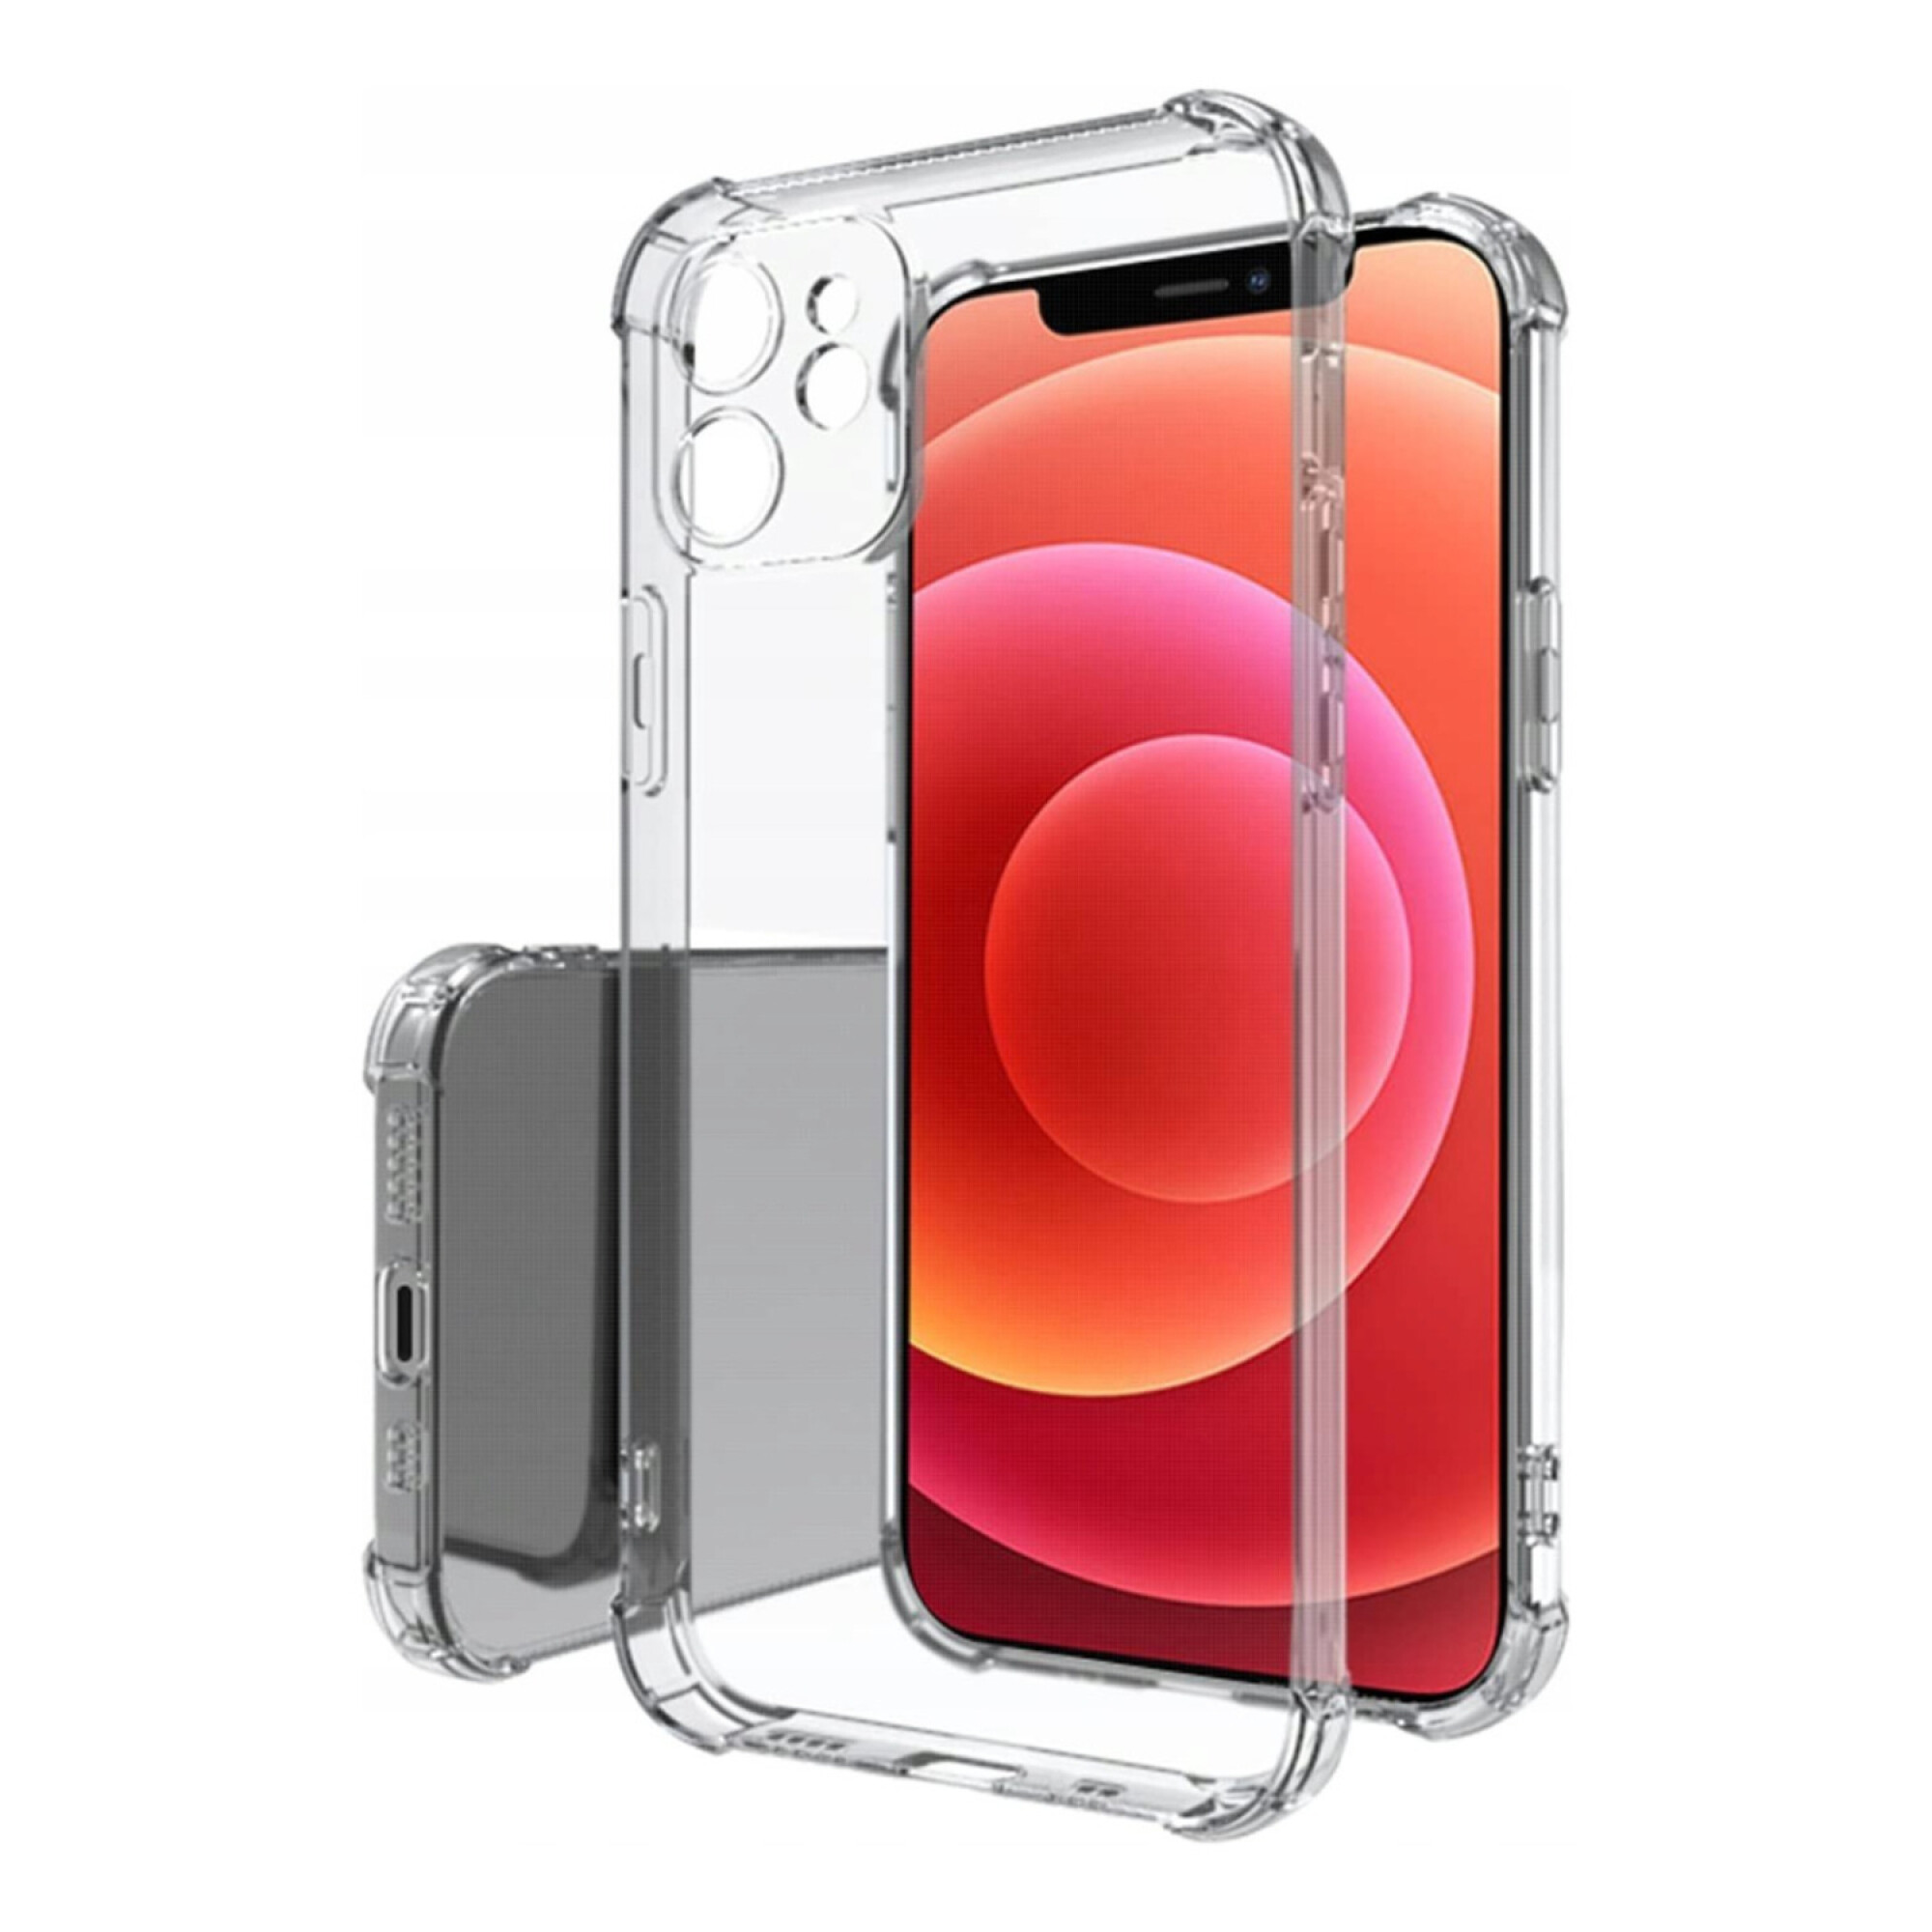 Carcasa Celular Funda Protector Case Tpu Transparente iPhone 12 — Atrix